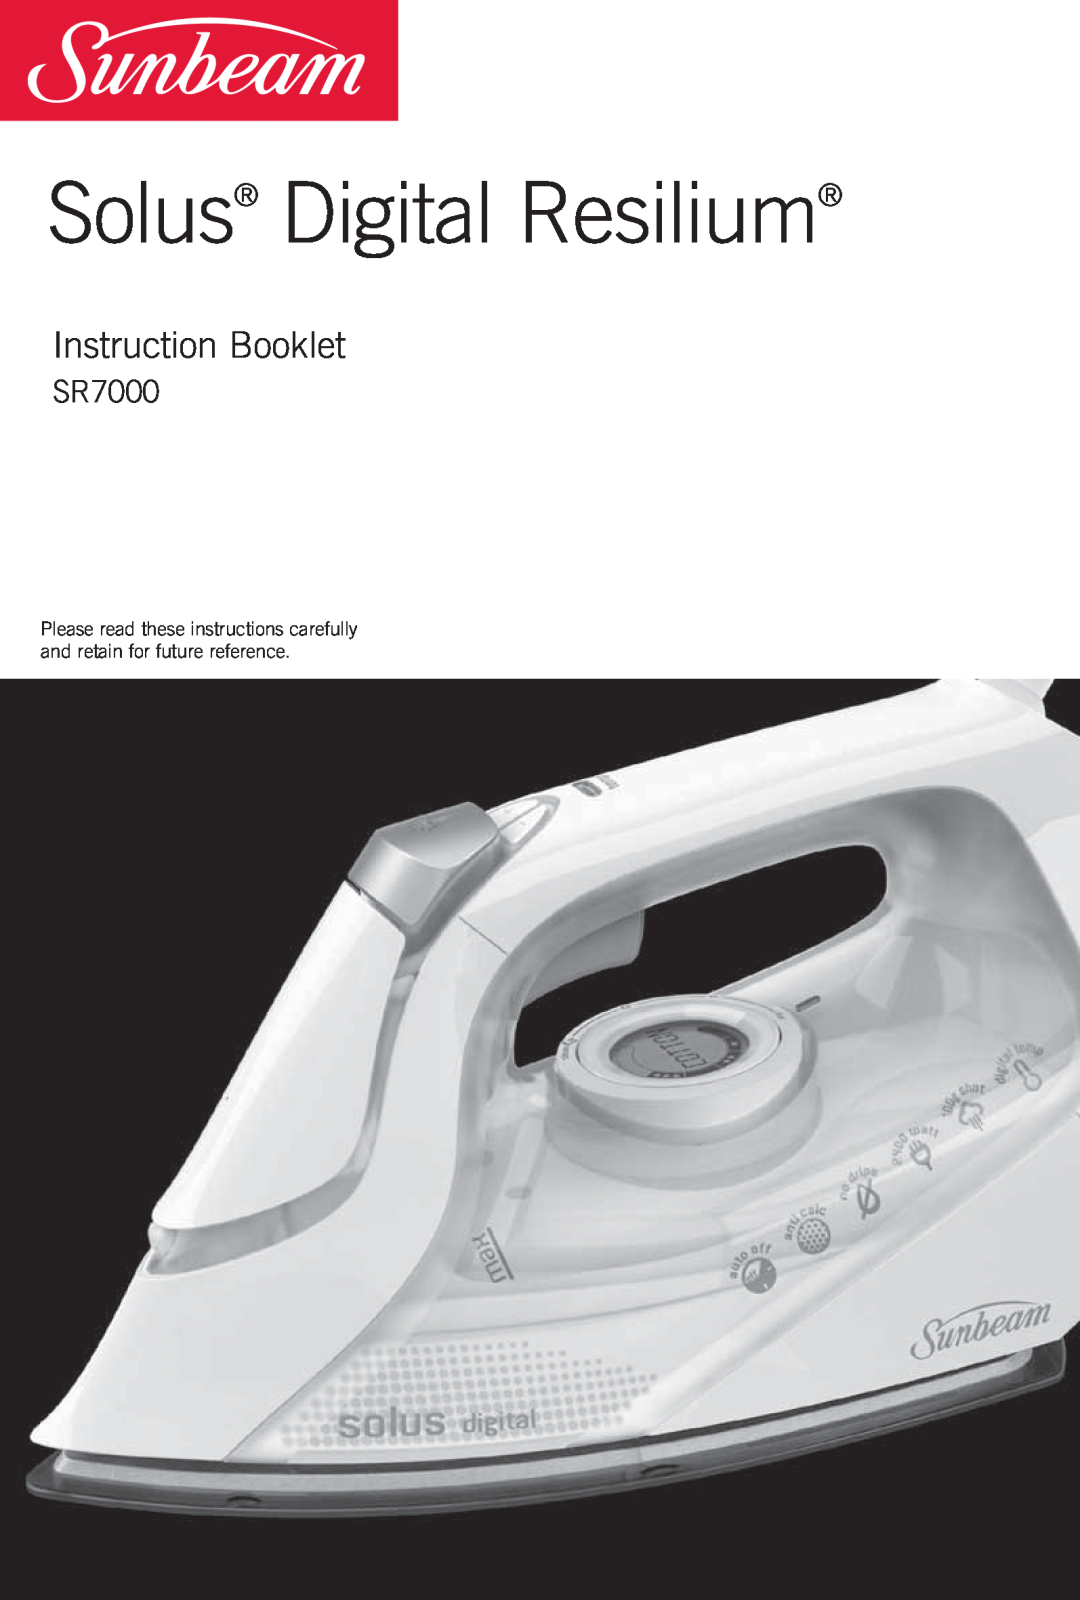 Sunbeam SR7000 manual Solus Digital Resilium, Instruction Booklet 